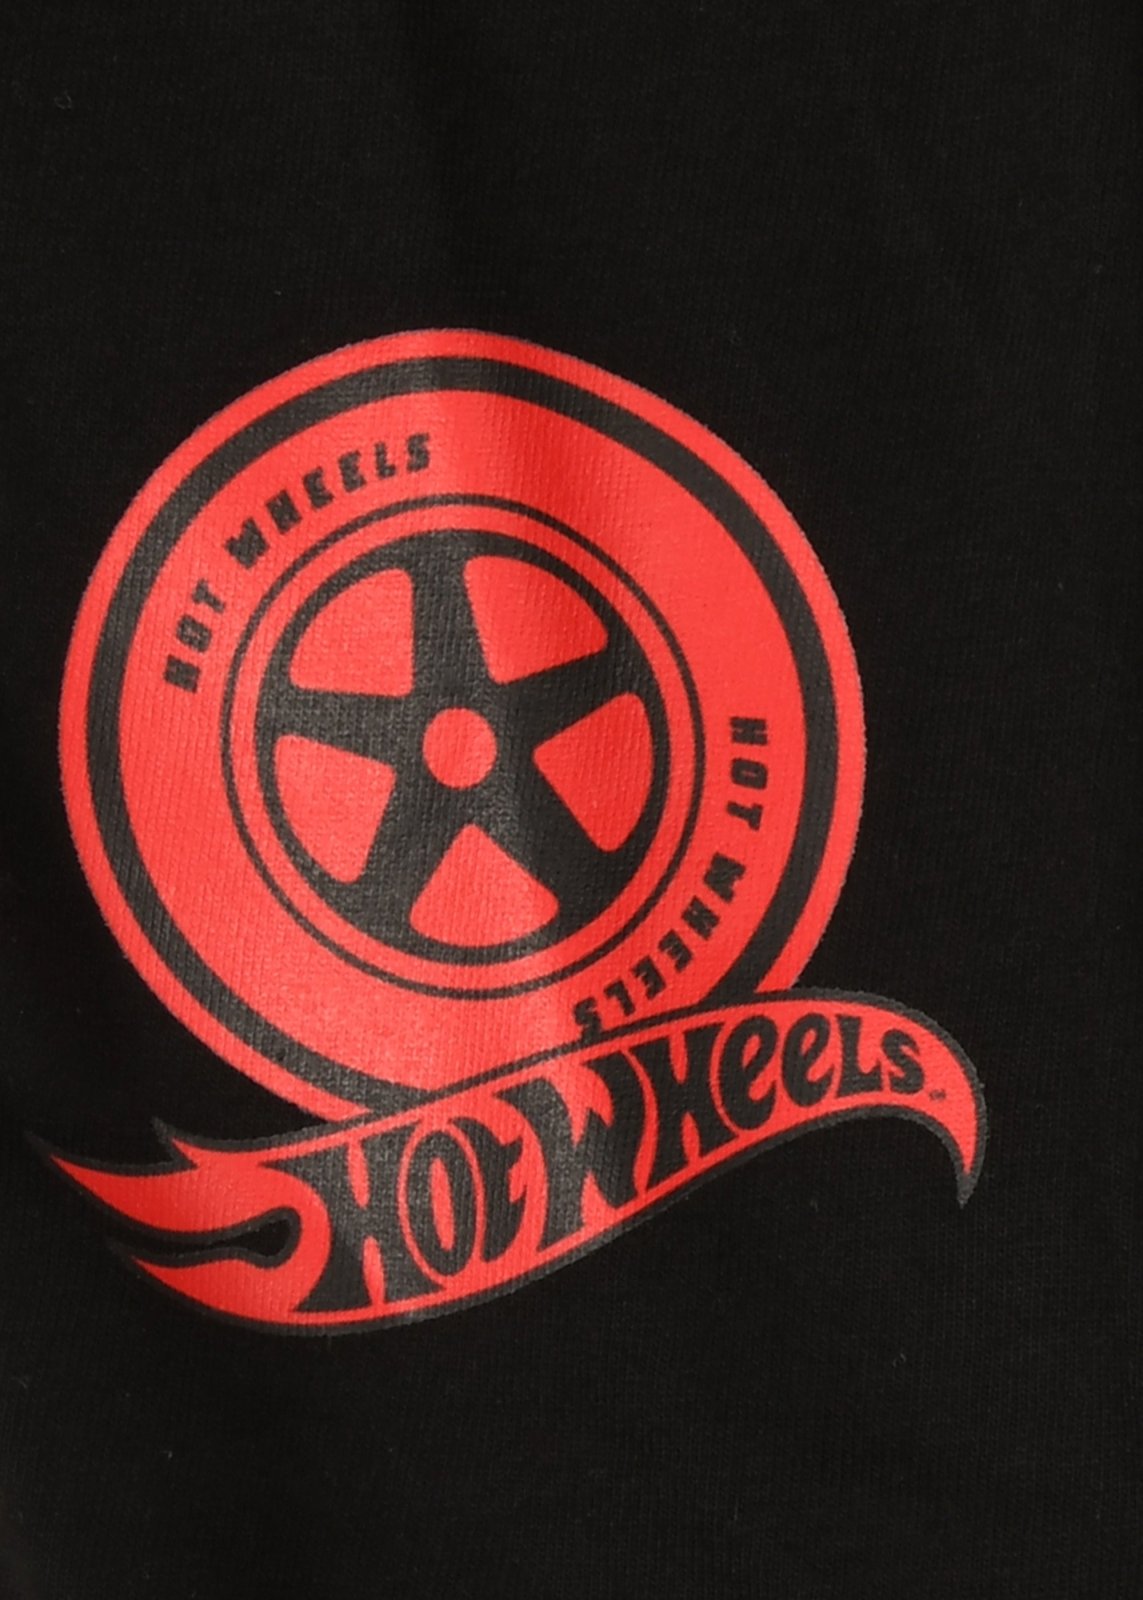 Hot Wheels Red & Black Long Sleeved Pyjamas Set - Brand Threads